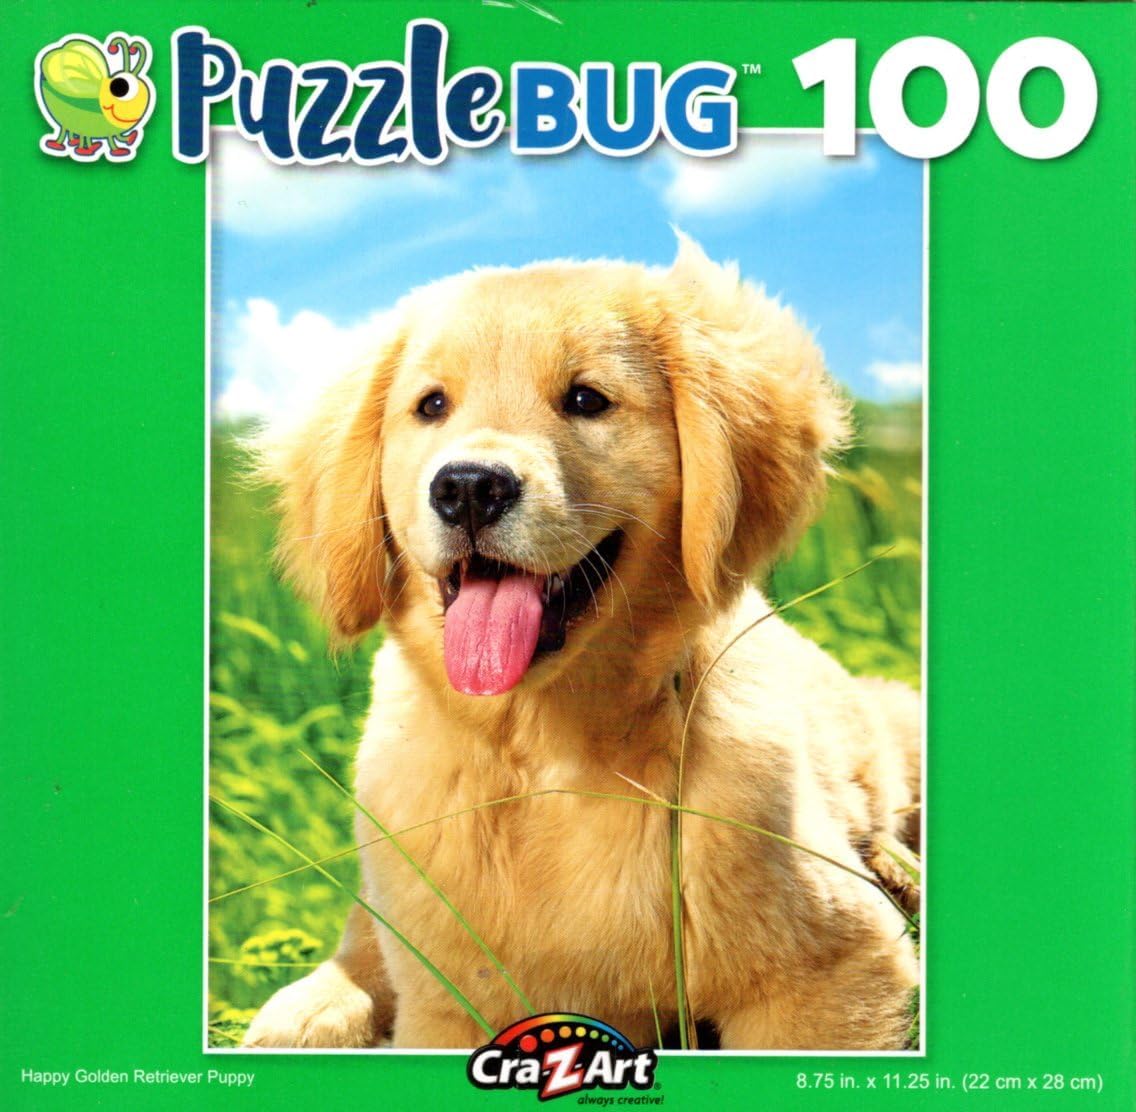 Happy Golden Retriever Puppy - 100 Pieces Jigsaw Puzzle